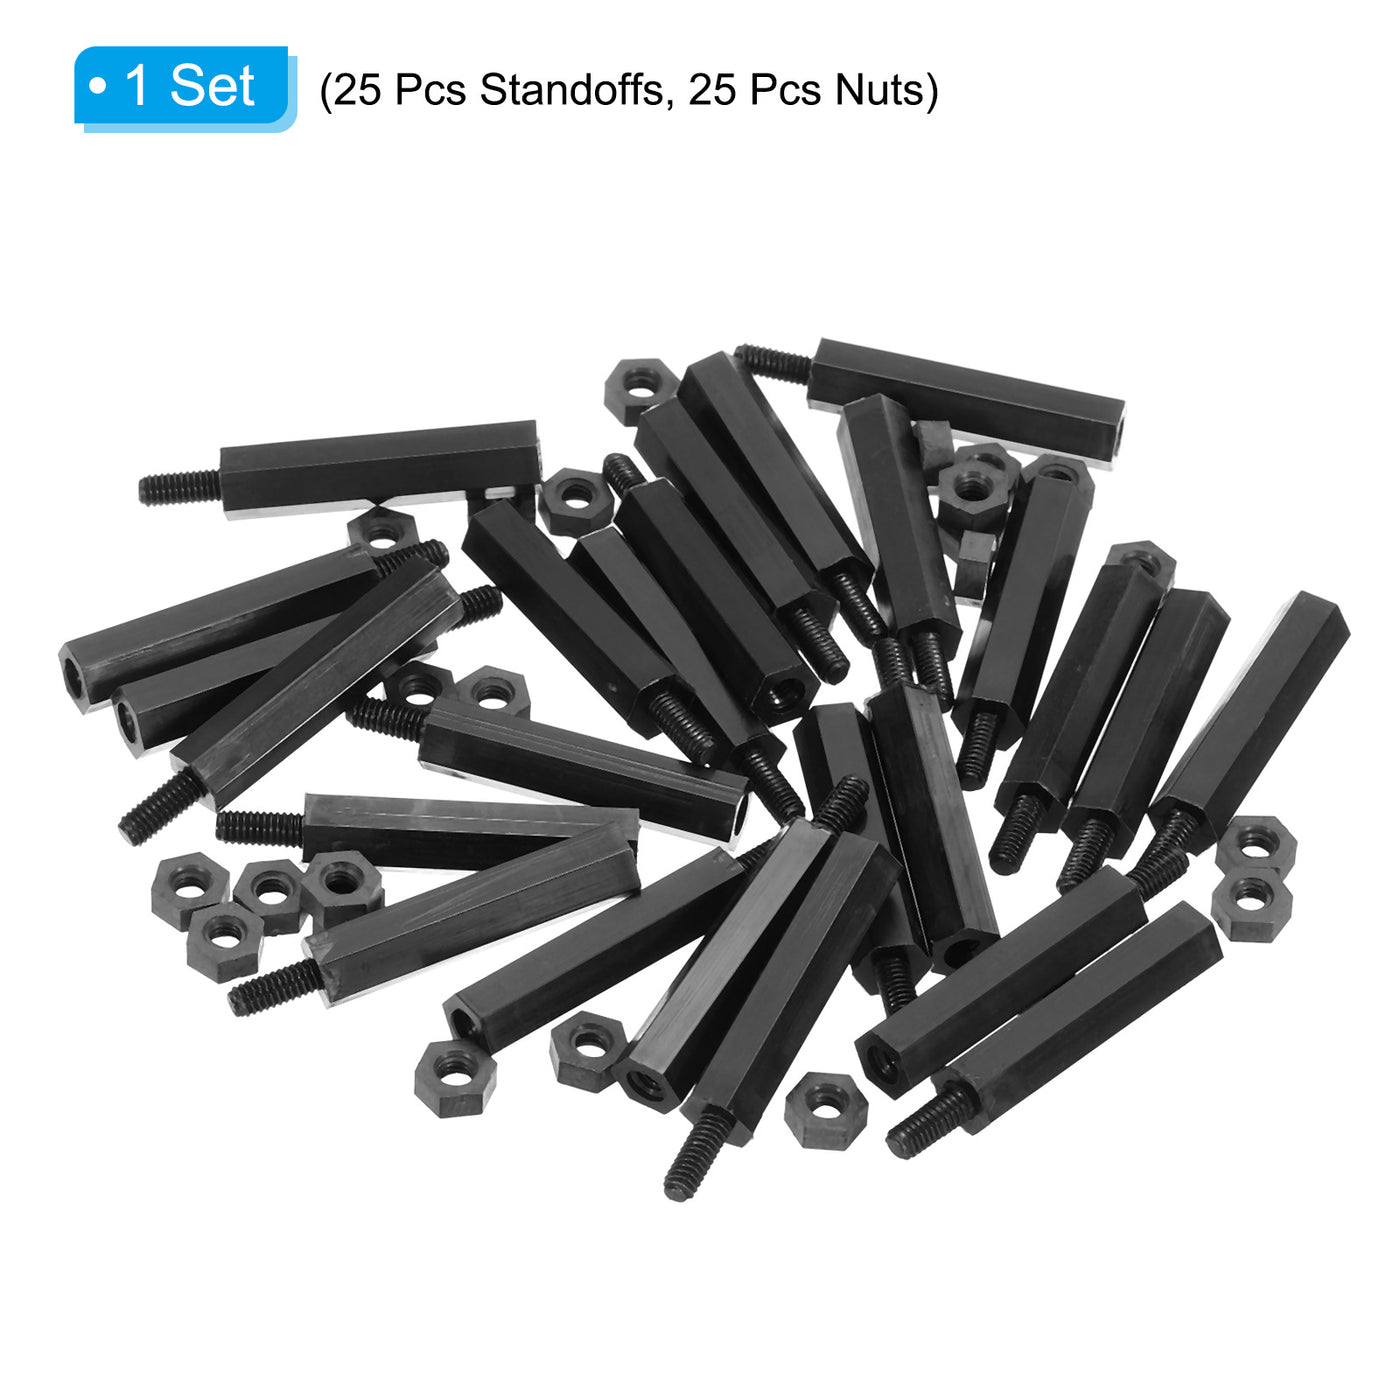 Harfington M2.5 Nylon Hex Standoff Screws Nuts, 50Pack PCB Threaded Kit(22mm+5mm, Black)